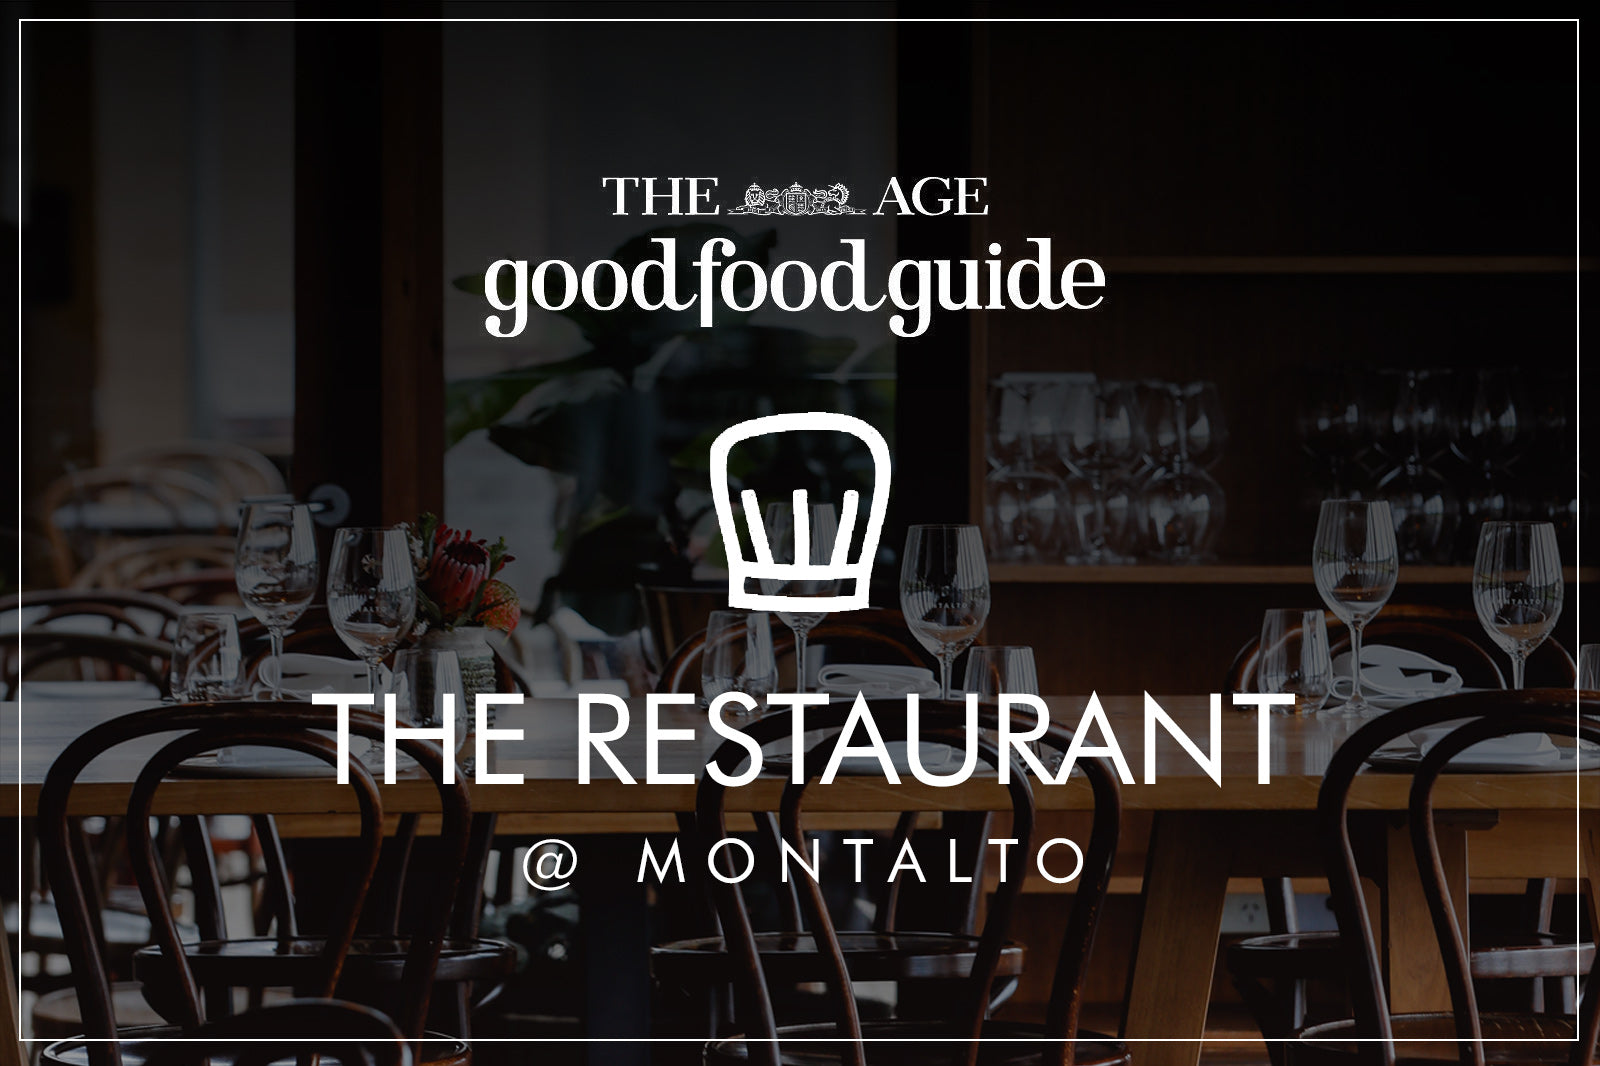 Good Food Guide Awards Winner: The Restaurant at Montalto